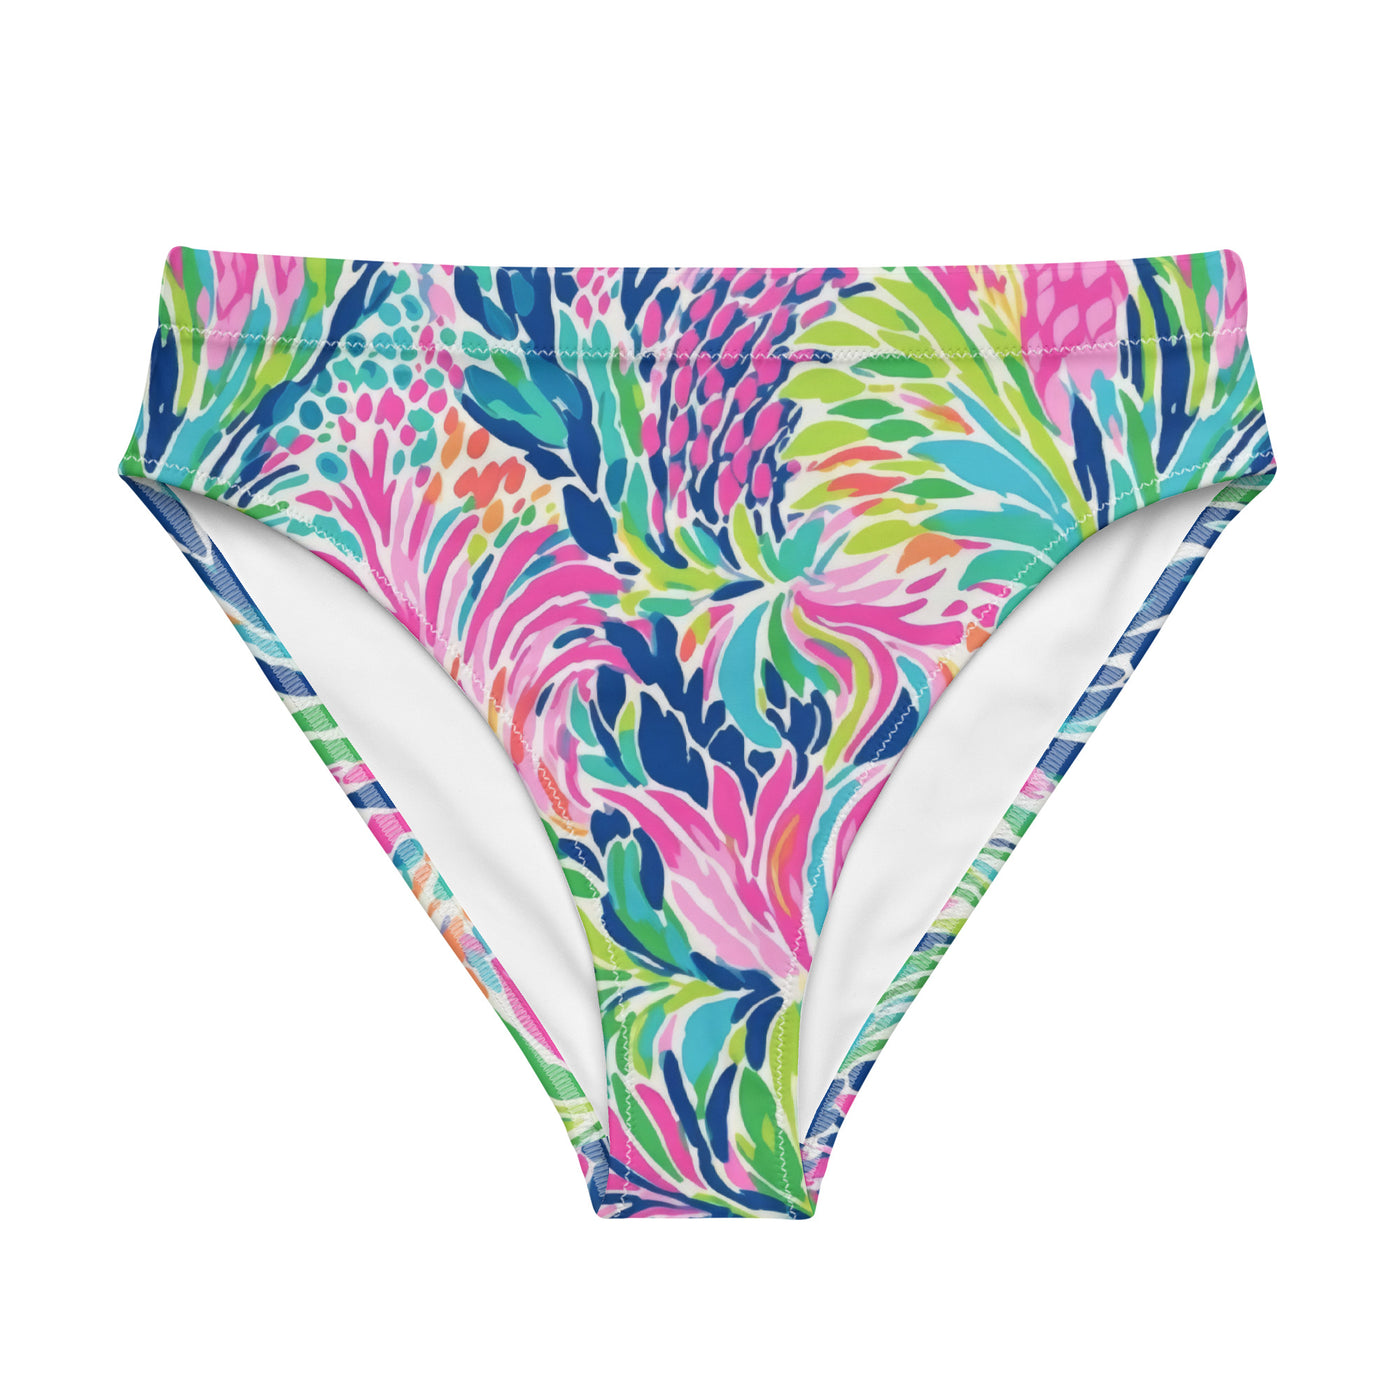 South Port Bikini Bottom - Coastal Cool - Swimwear and Beachwear - Recycled fabrics